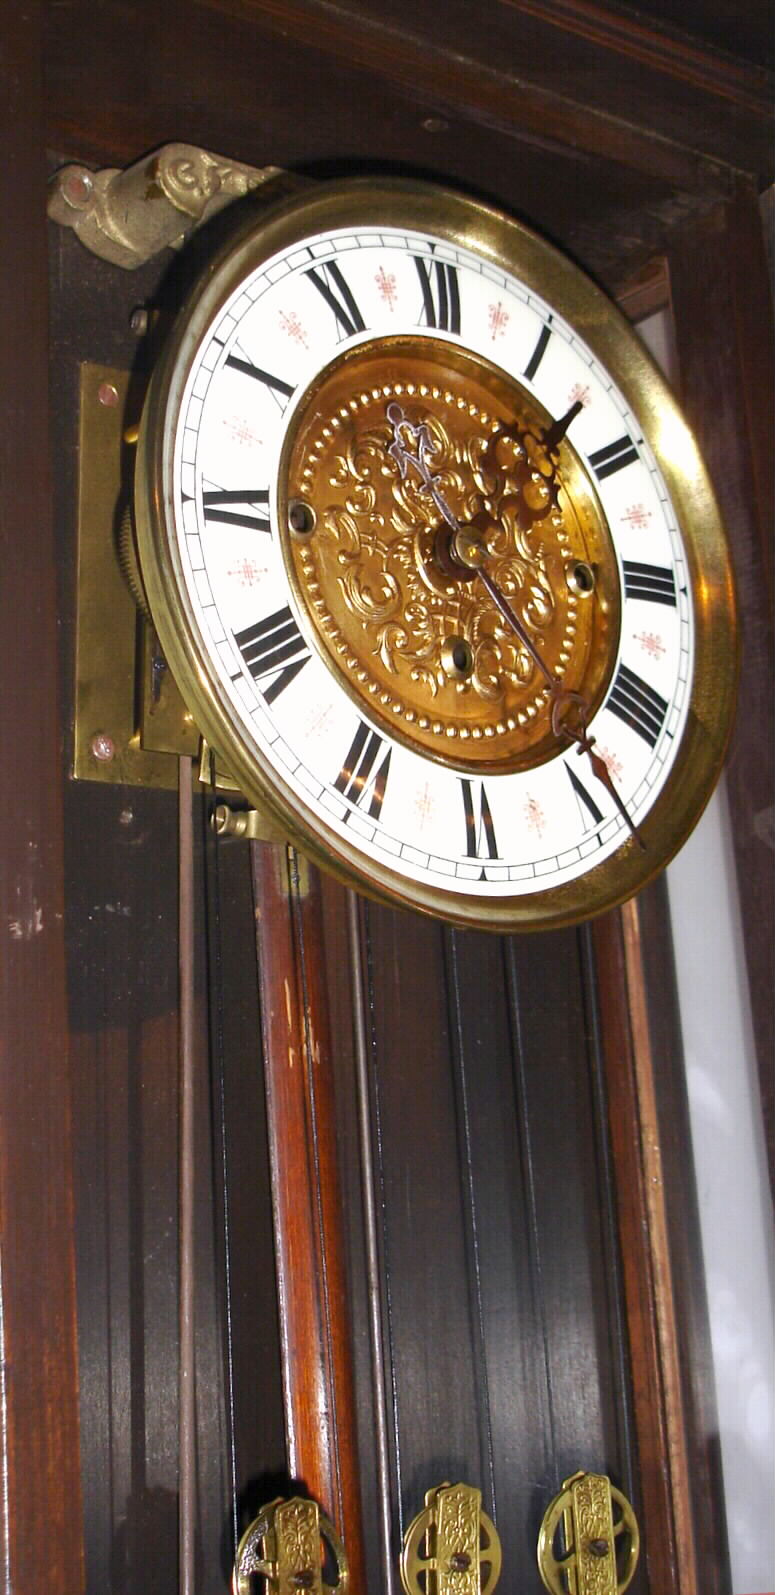 New Old Stock Reproduction Seth Thomas Clock #2 Pendulum Rating Nut 344A